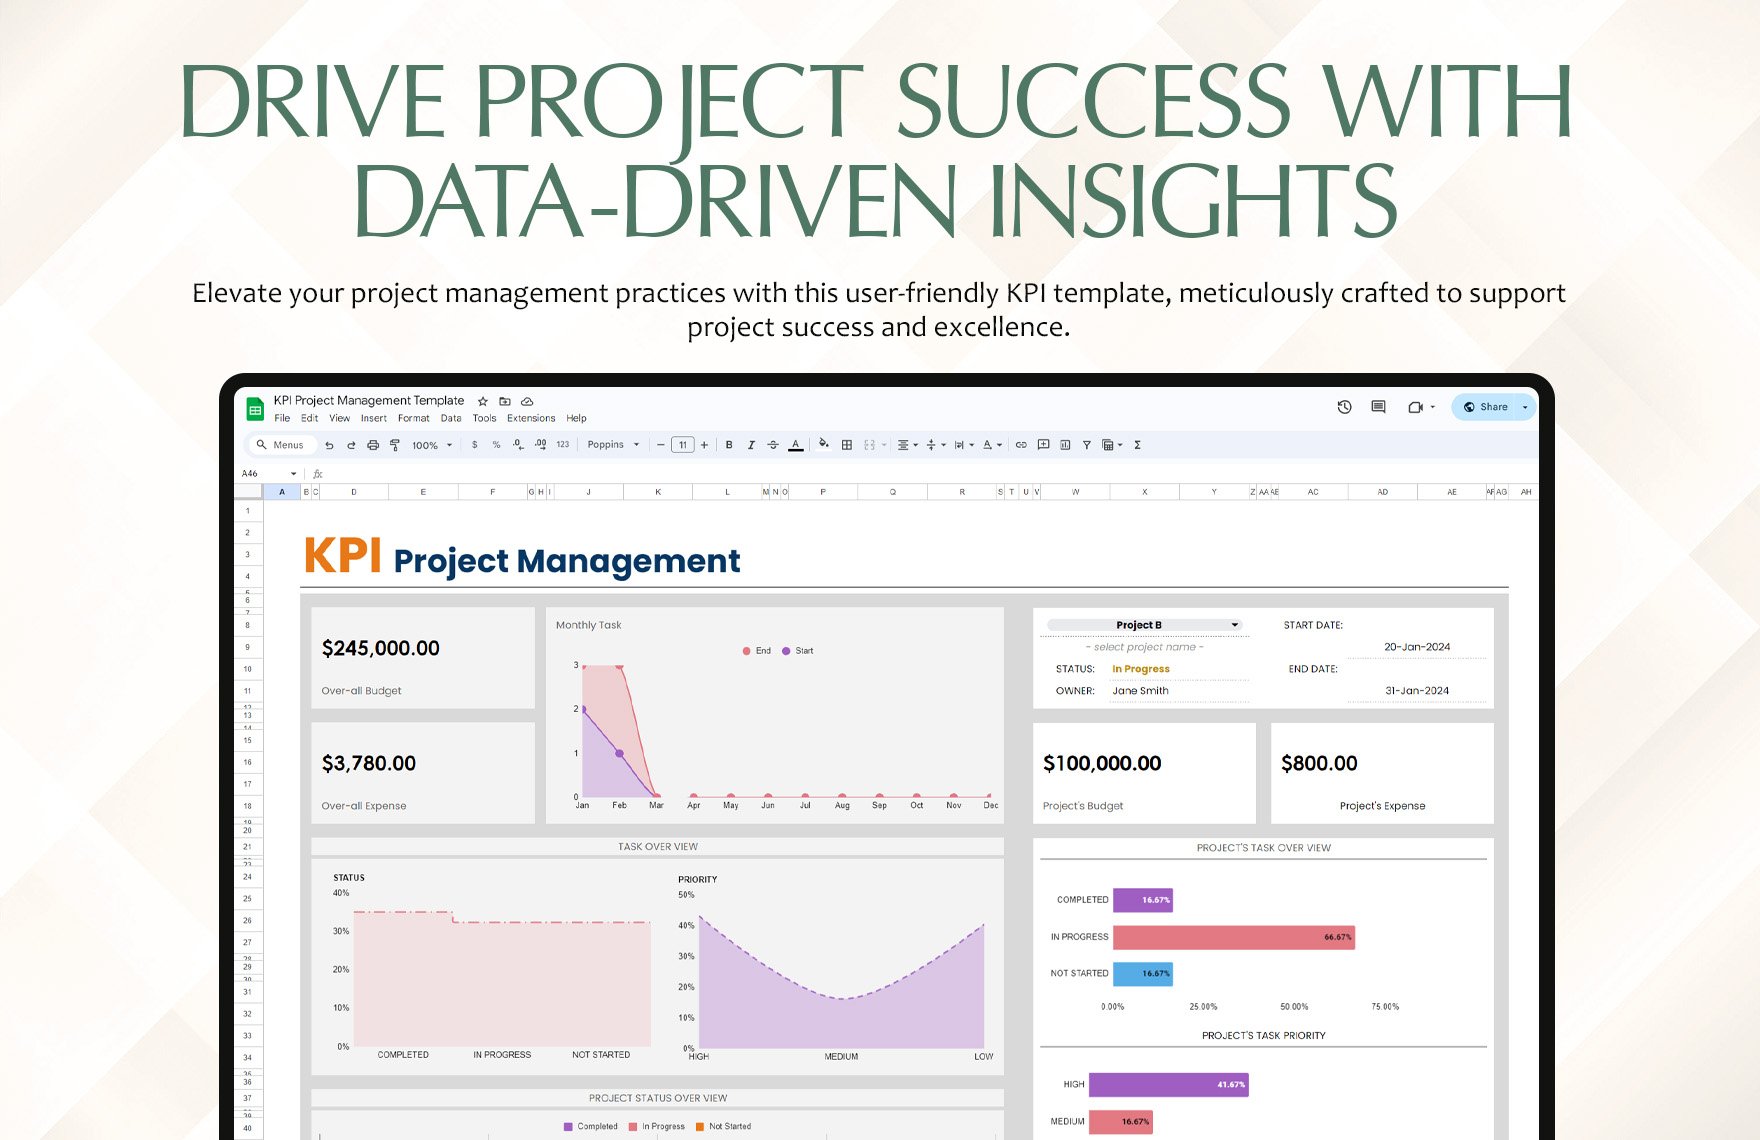 KPI Project Management Template